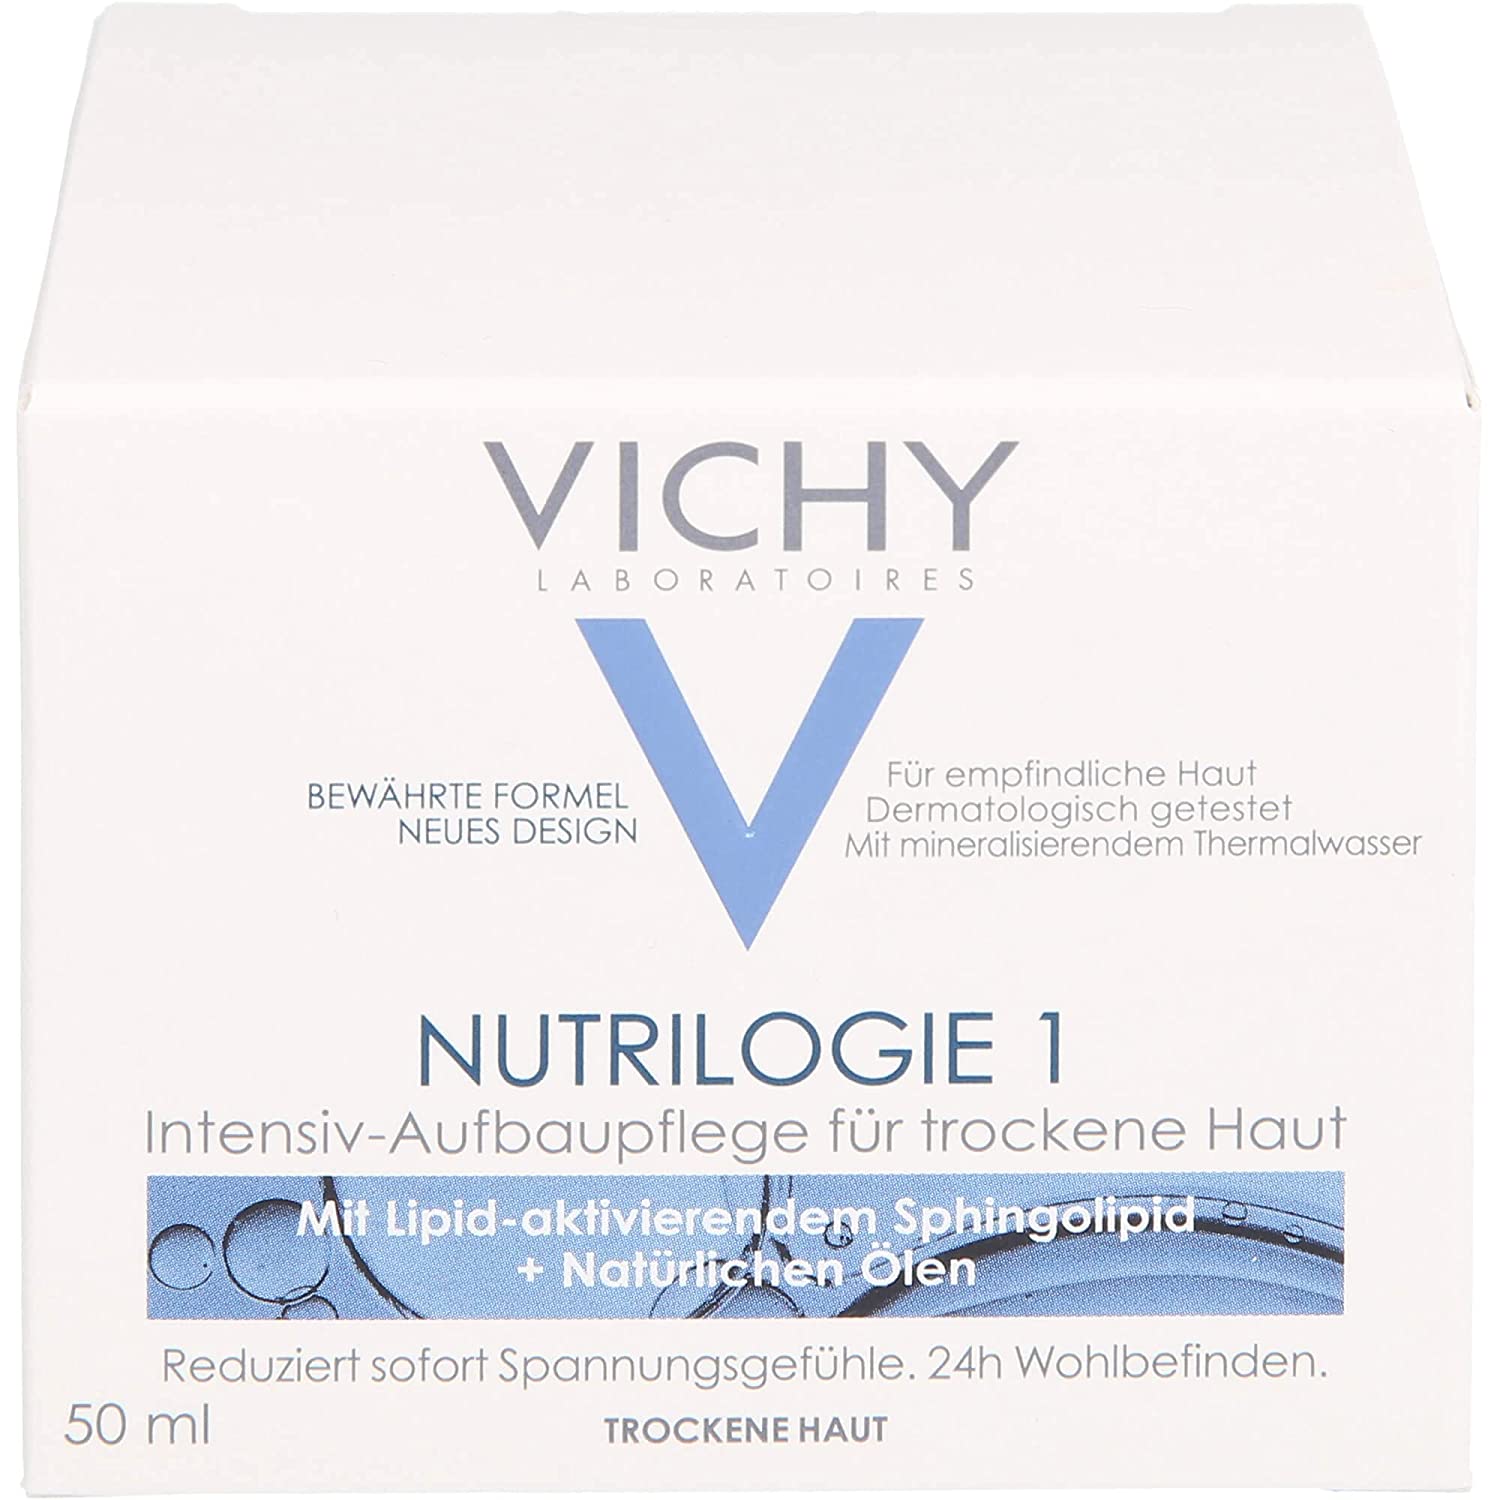 Vichy Nutrilogie 1 Cream 50 ml